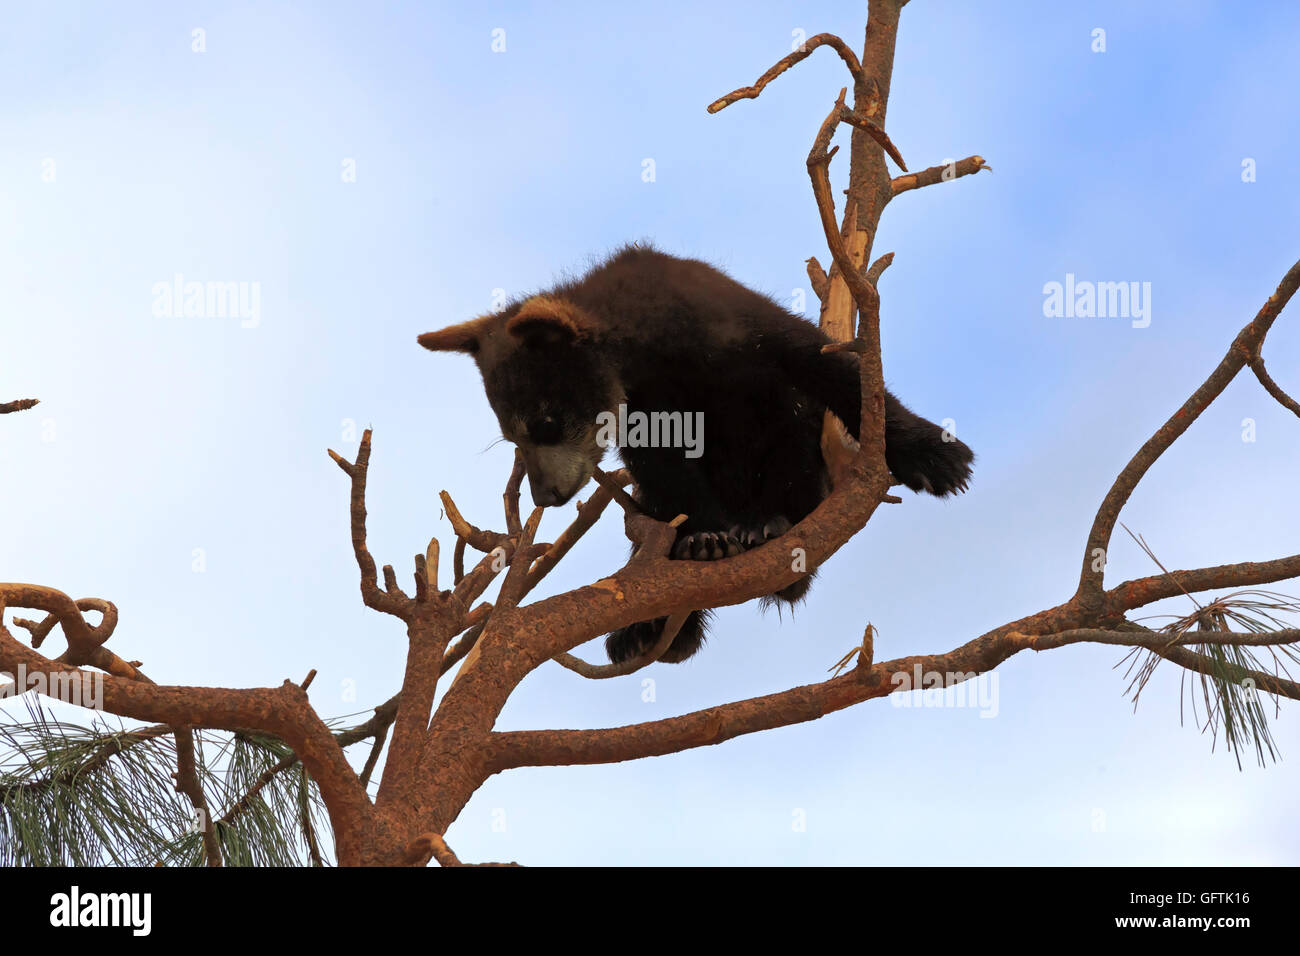 Black bear cub, Ursus americanus, climbing a tree Stock Photo